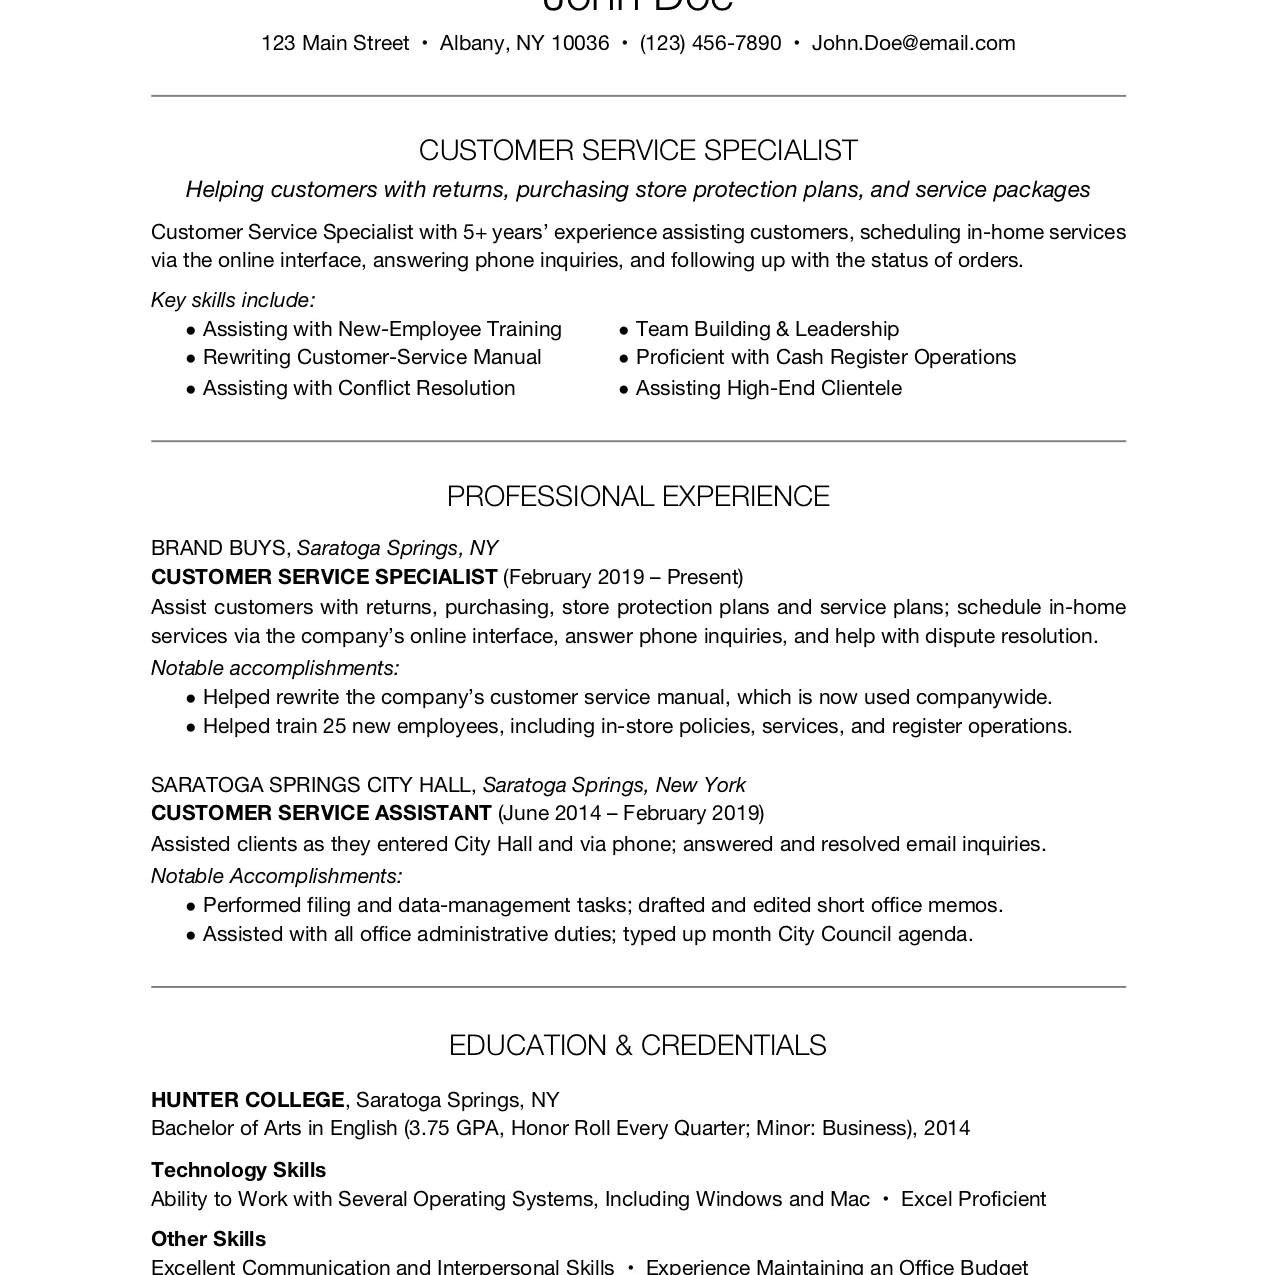 Sample Customer Service Resume Summary Qualifications Customer Service Resume Examples and Writing Tips